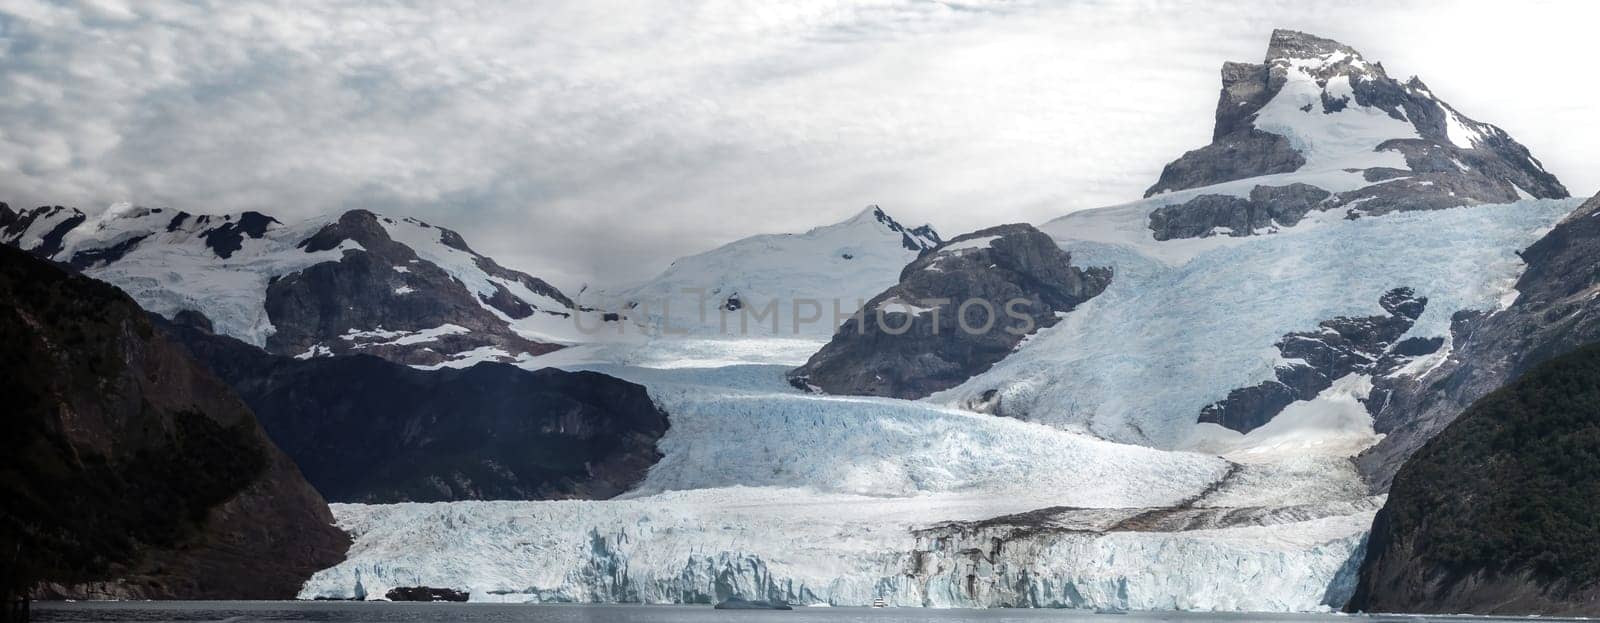 Majestic Glacier View with Snowy Peaks and Cloudy Sky by FerradalFCG